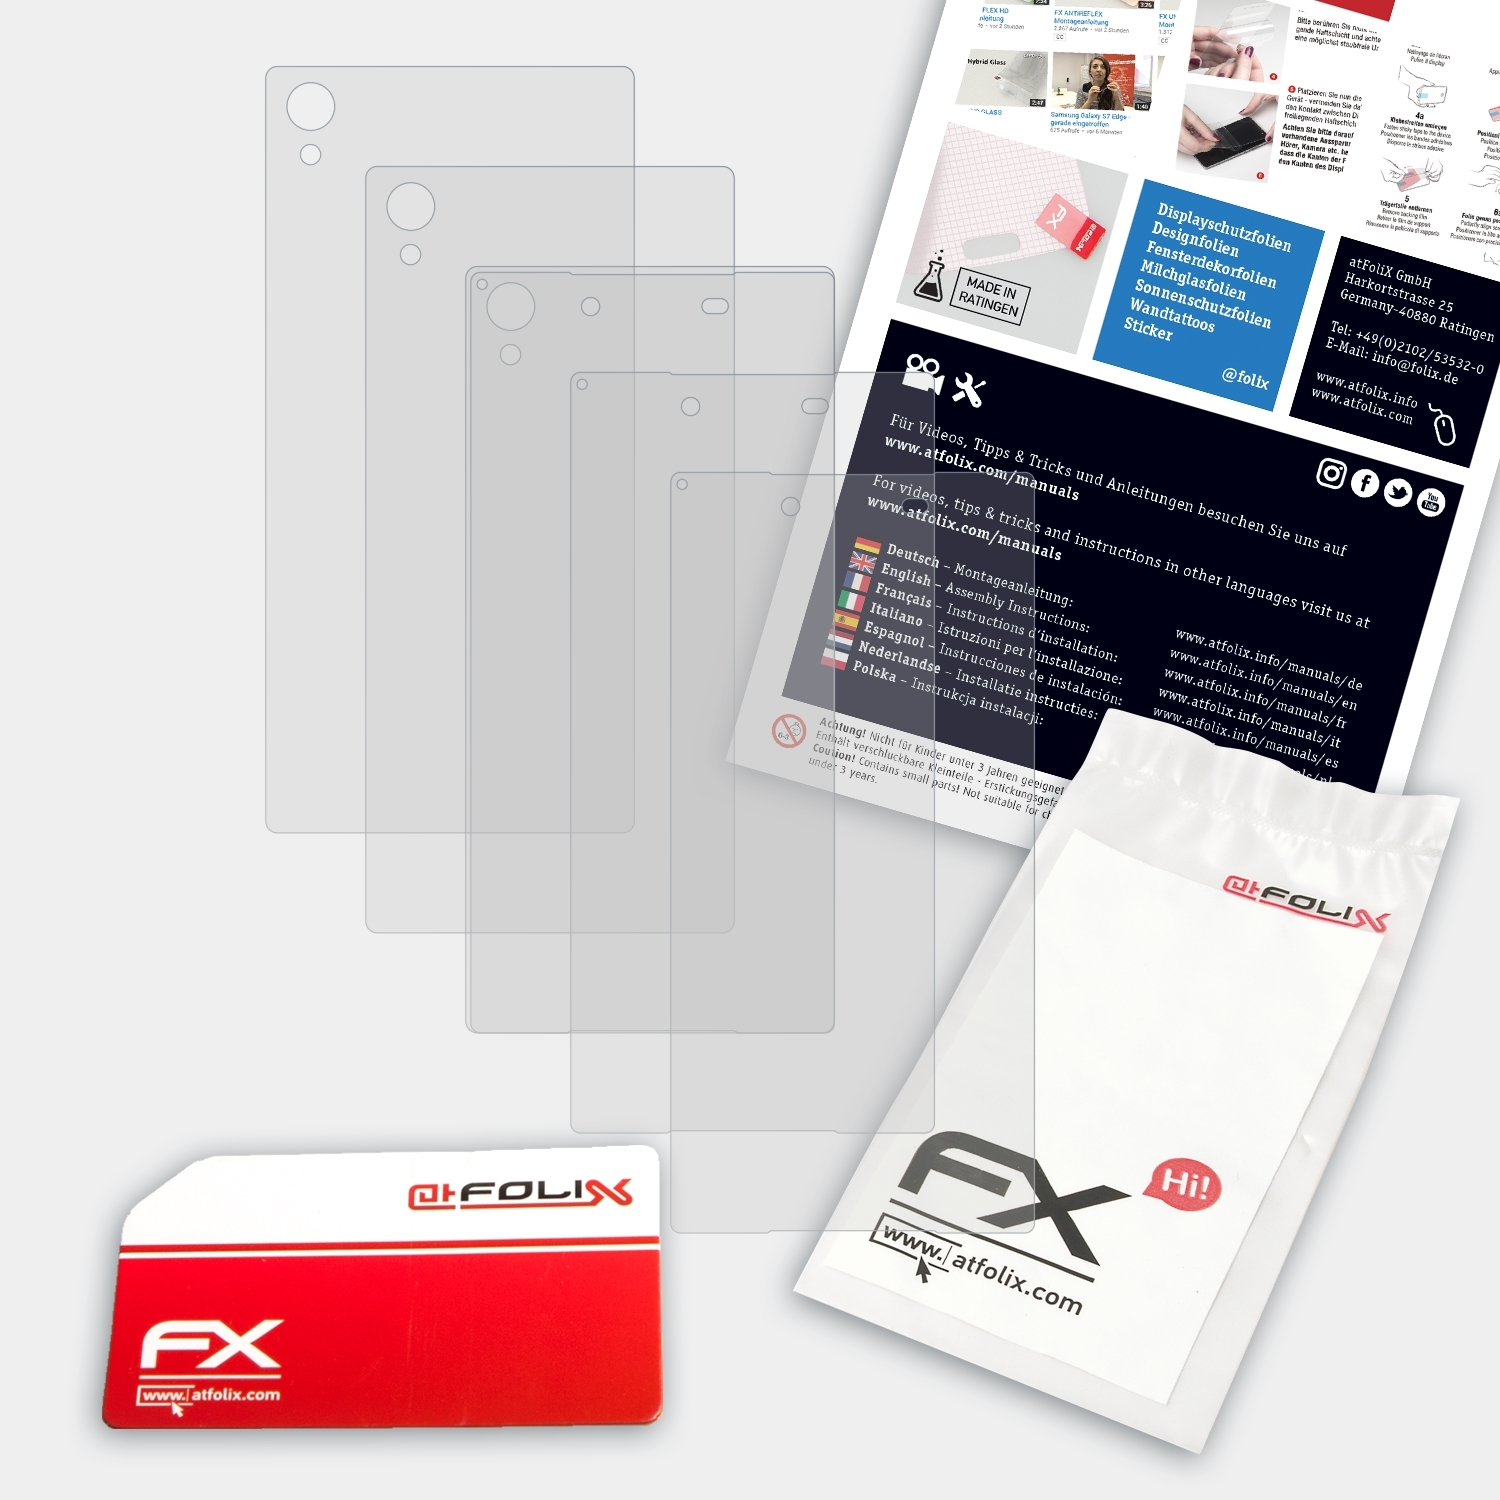 Xperia Sony Z5 ATFOLIX 3x FX-Antireflex Premium) Displayschutz(für